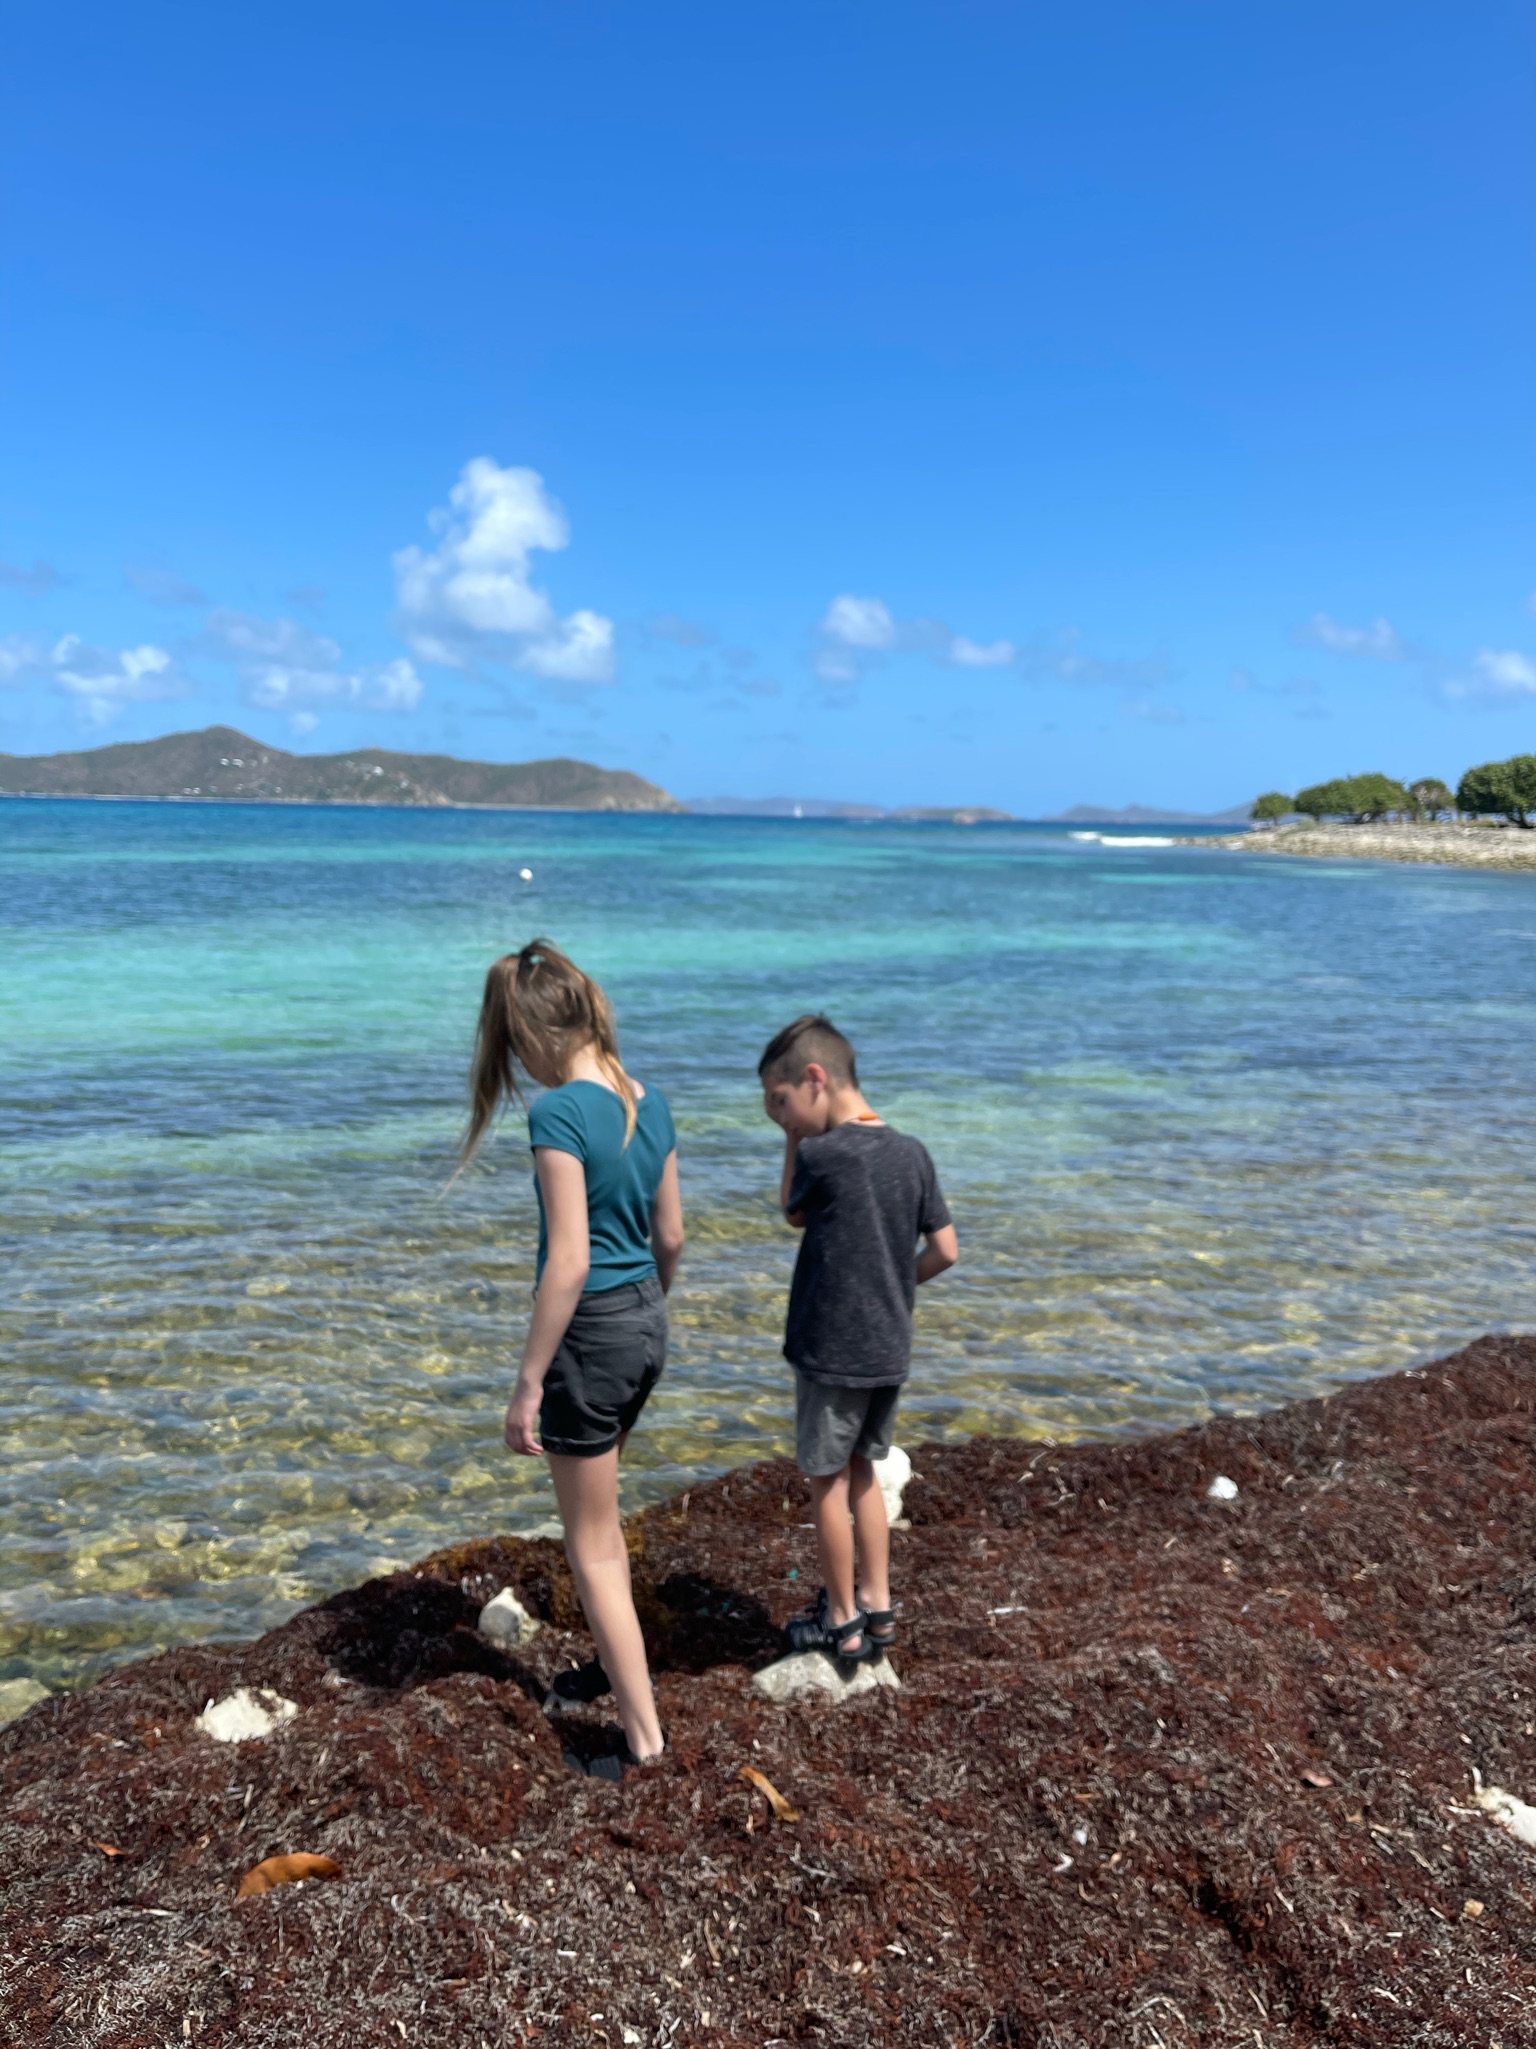 2 kids over looking the colorful ocean standing on old seaweed